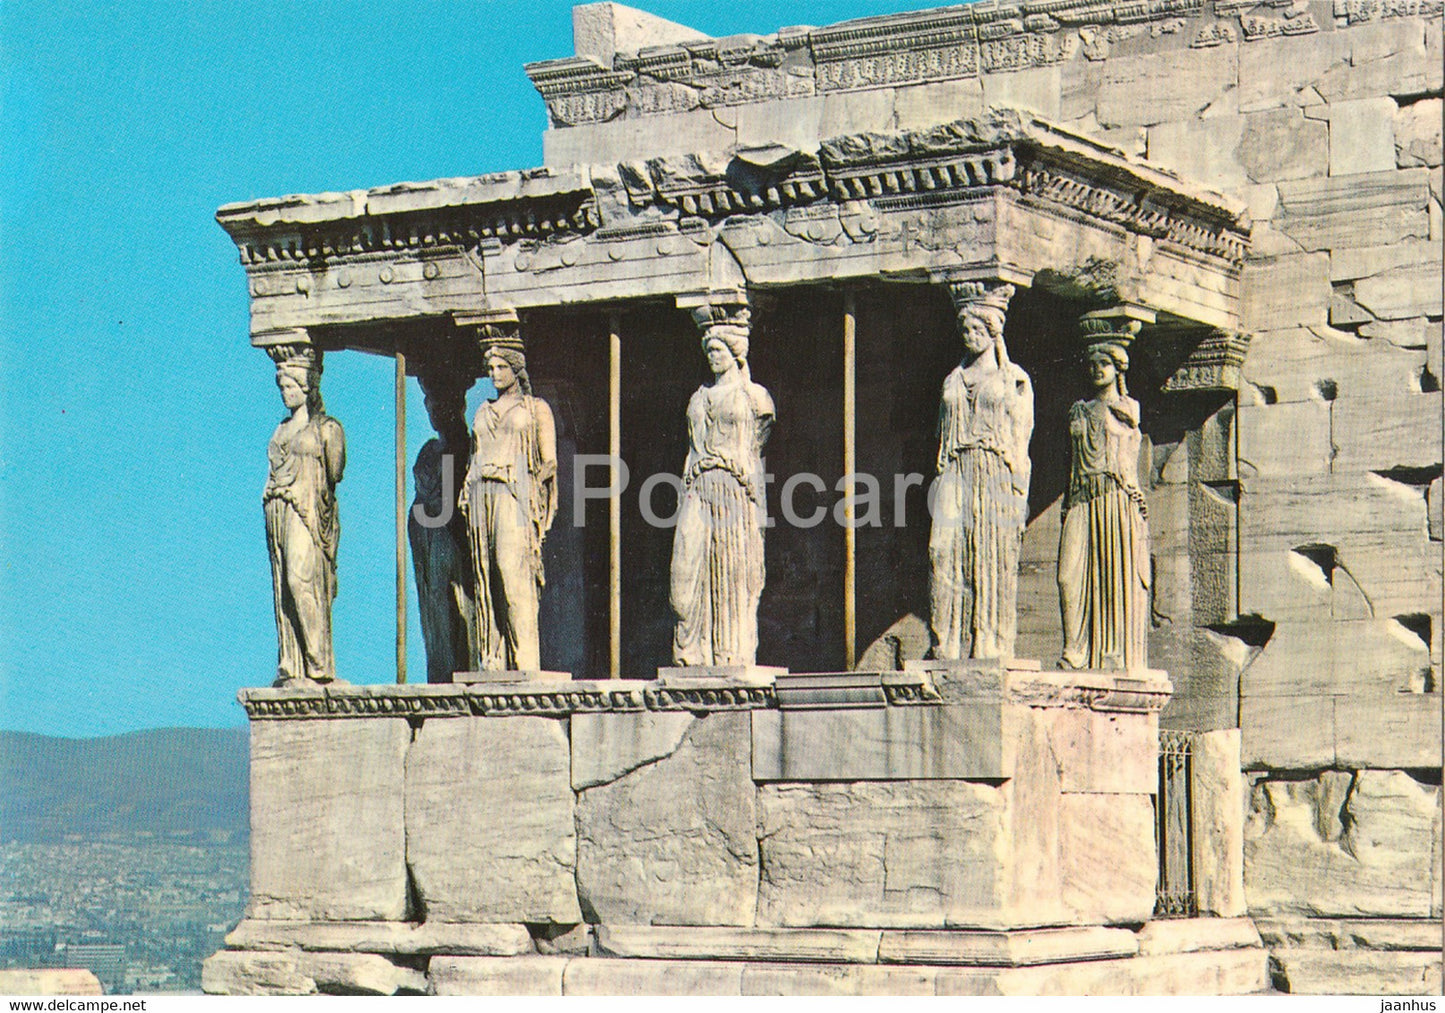 Athens - Acropolis - The Caryatides - Ancient Greece - 6-B-1 - 1982 - Greece - unused - JH Postcards